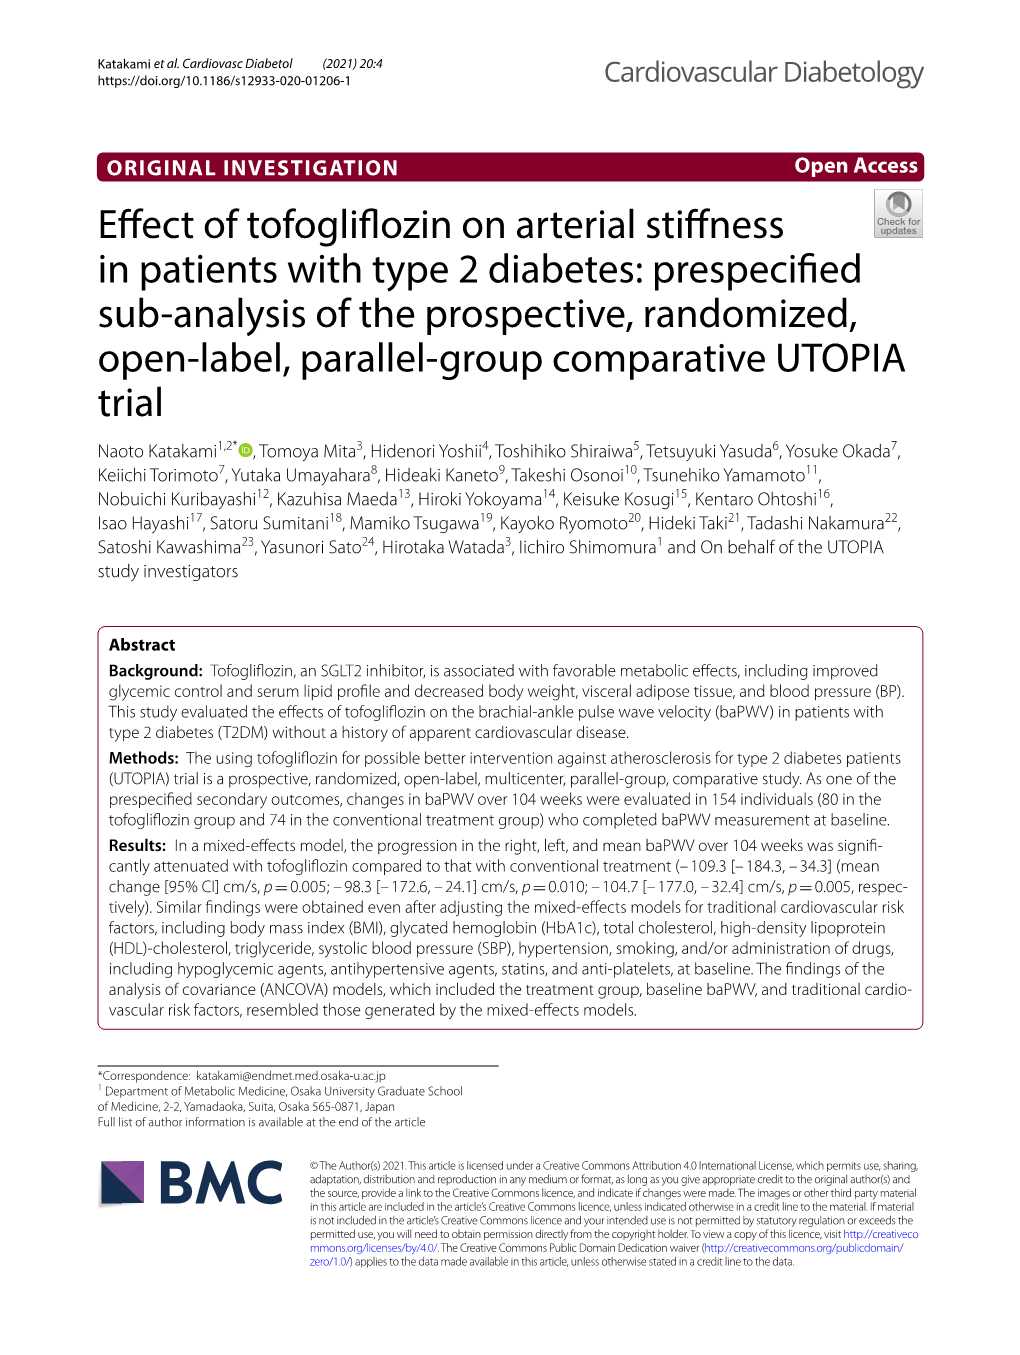 Effect of Tofogliflozin on Arterial Stiffness in Patients with Type 2